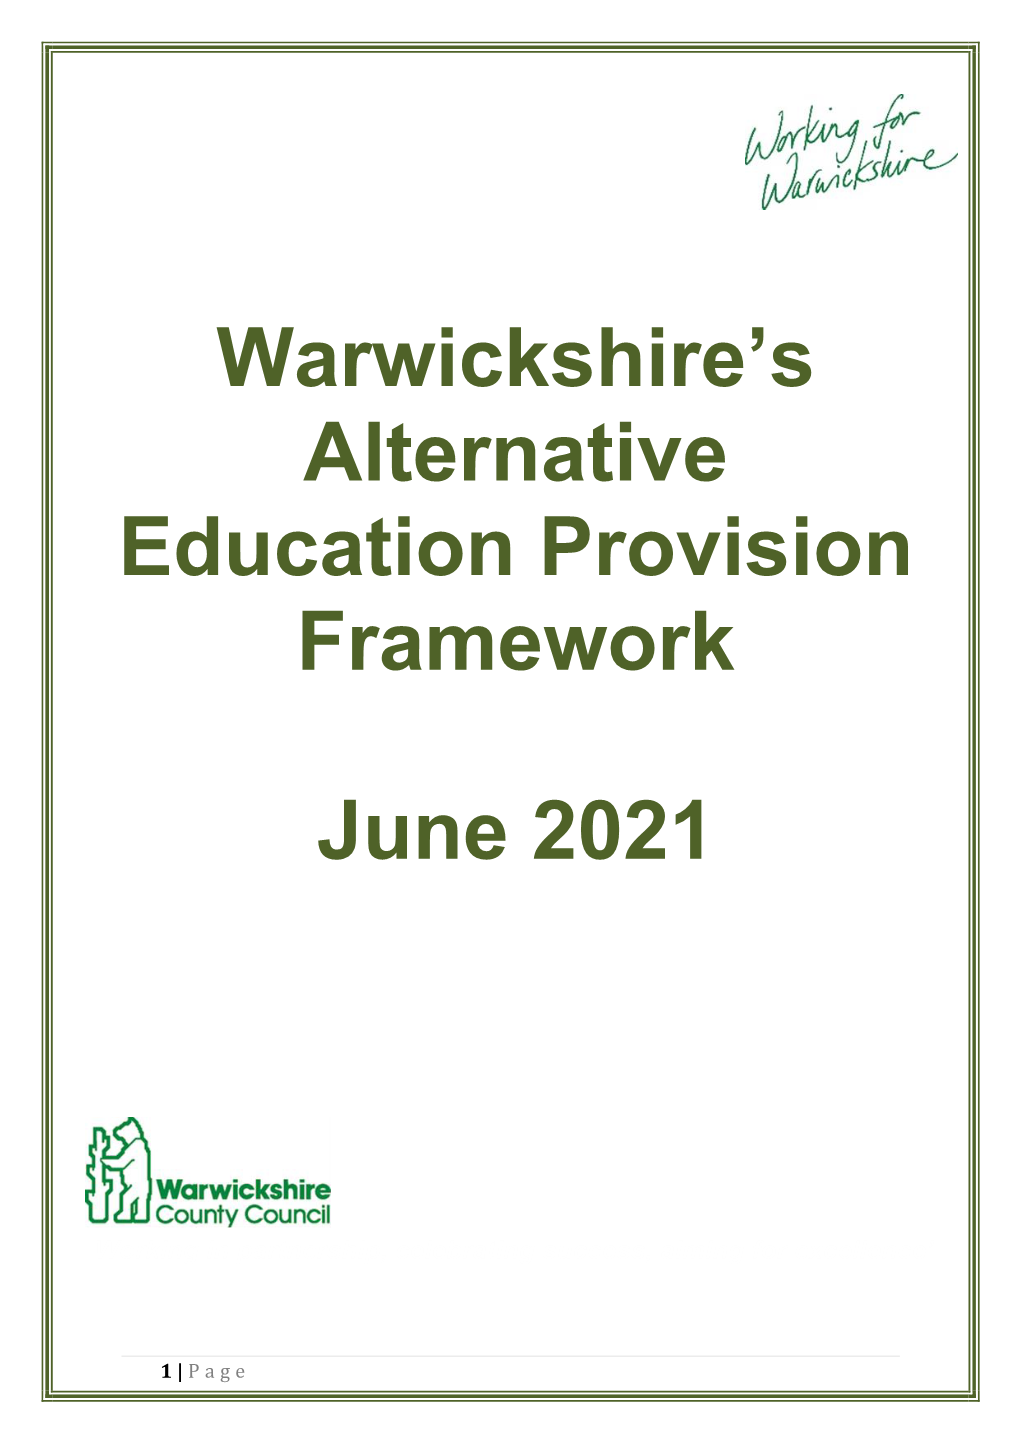 Warwickshire's Alternative Education Provision Framework June 2021